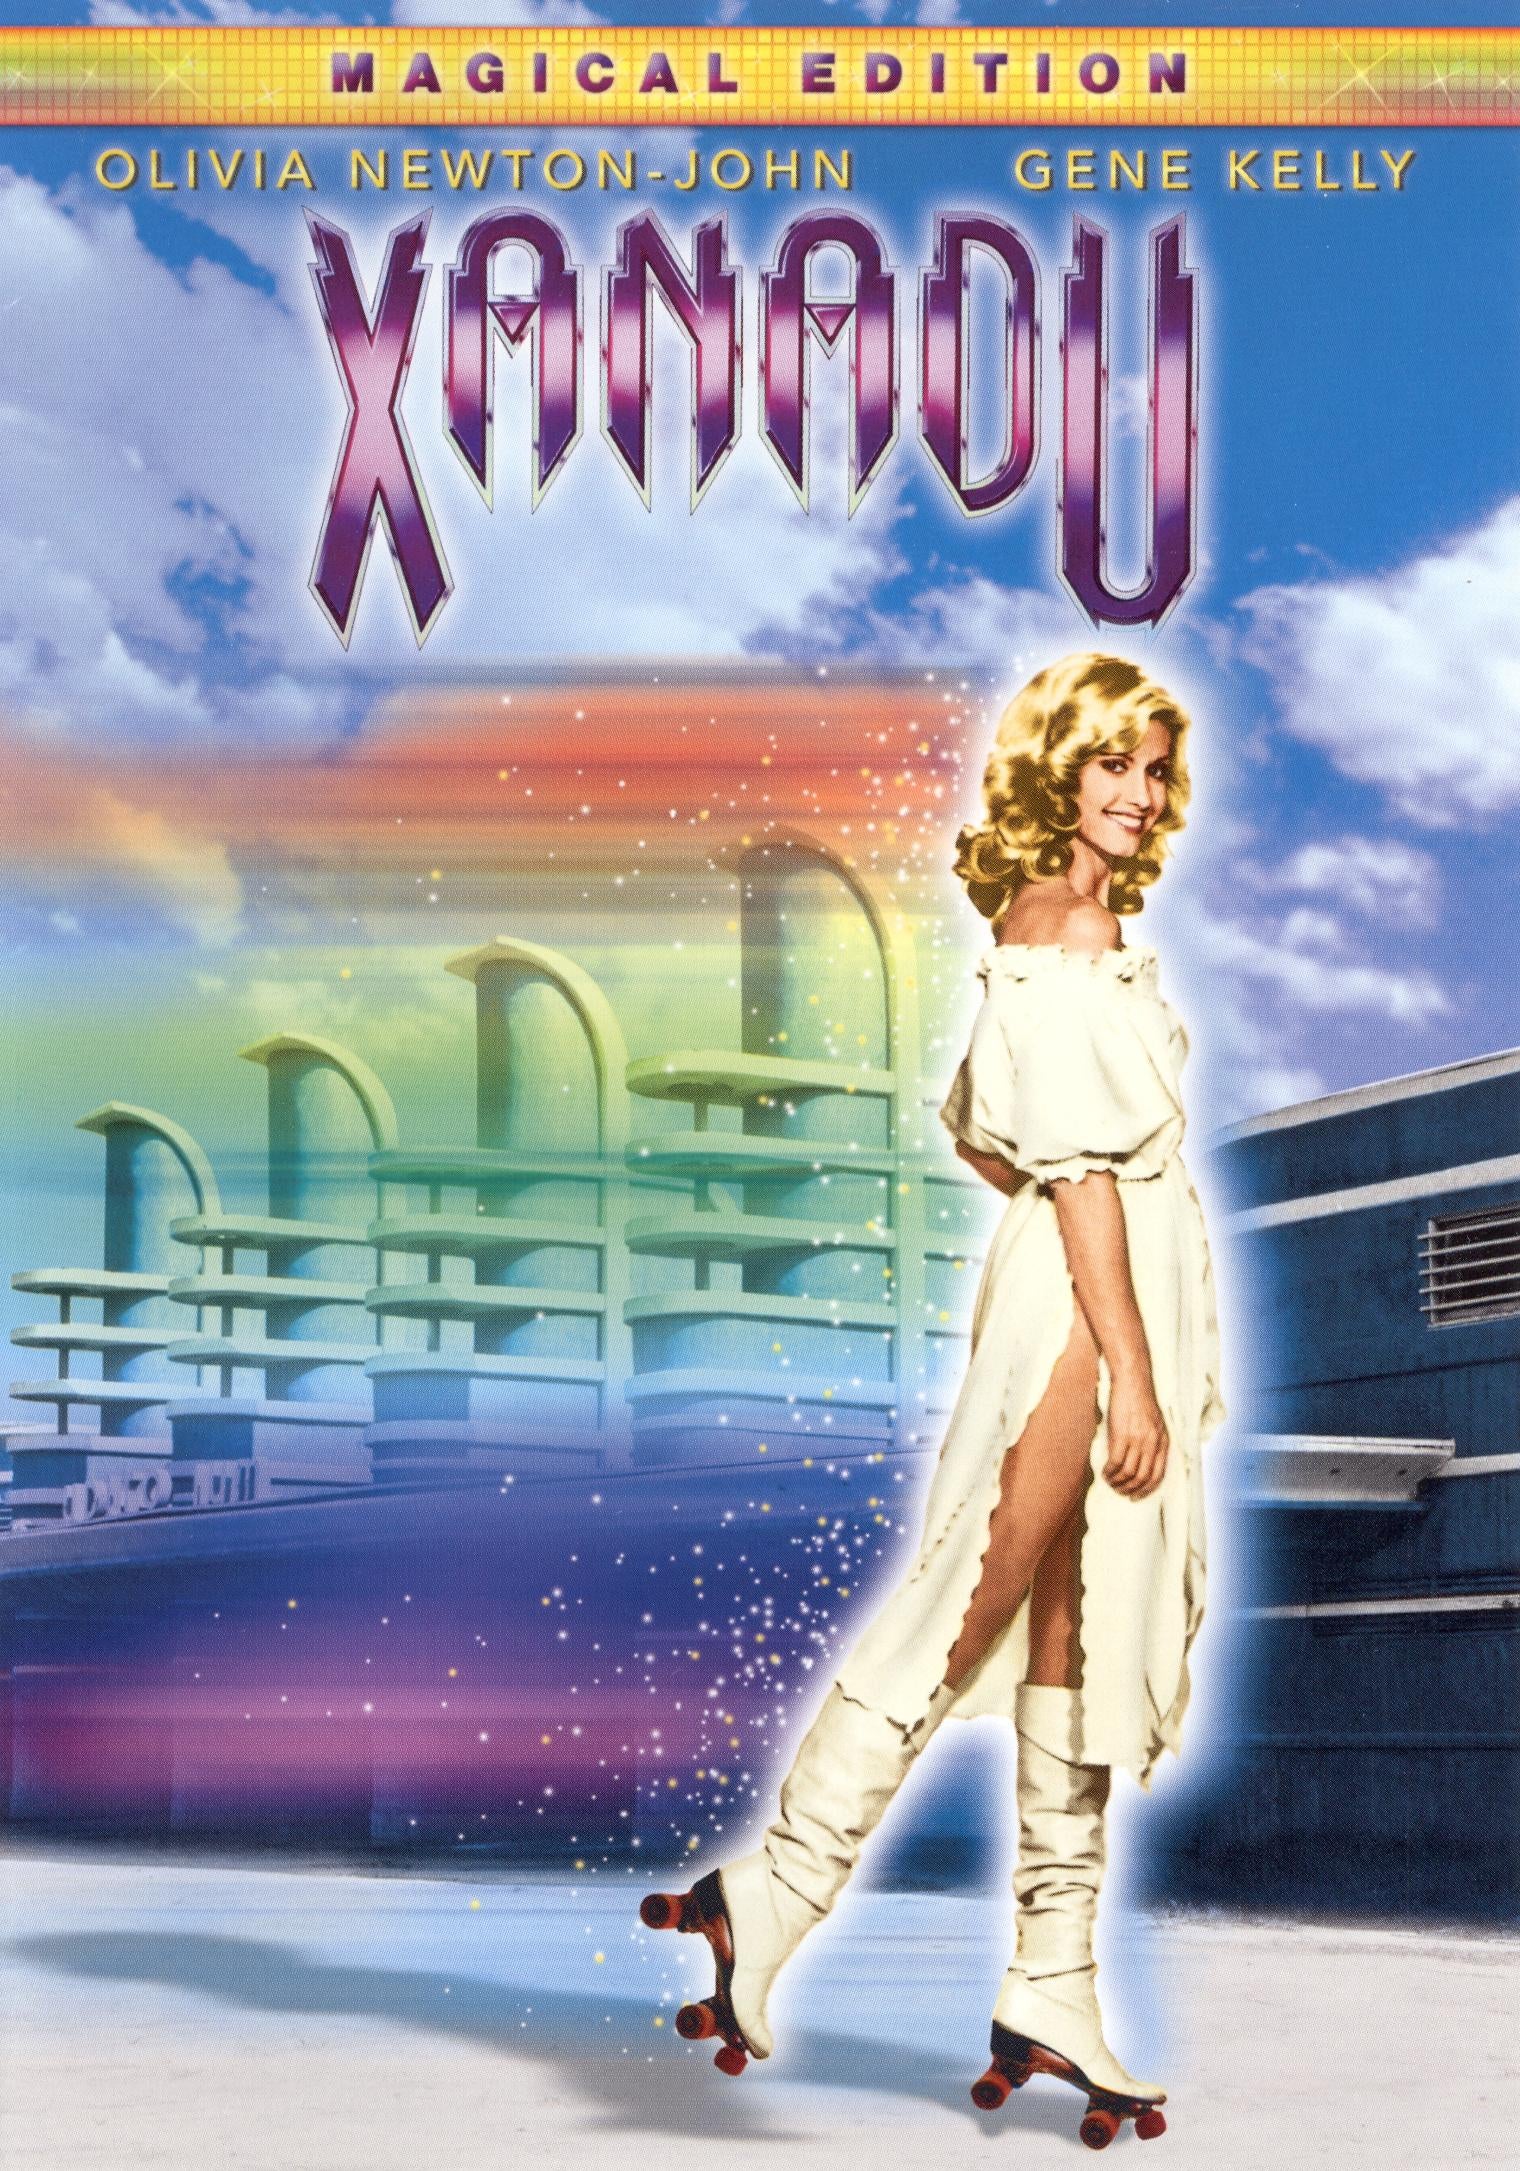 Xanadu [Magical Edition] cover art